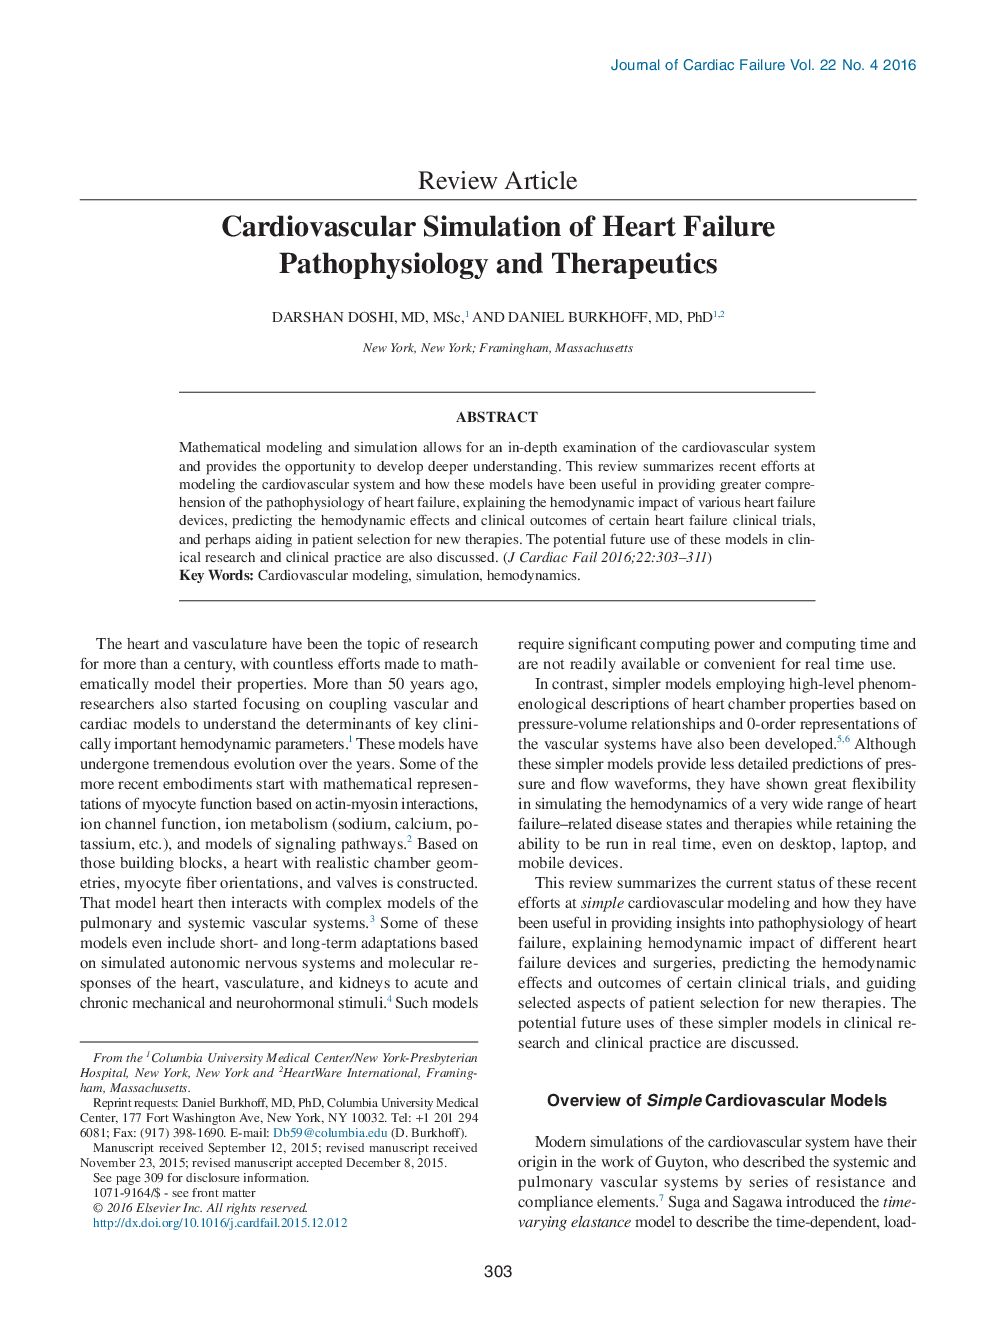 Cardiovascular Simulation of Heart Failure Pathophysiology and Therapeutics